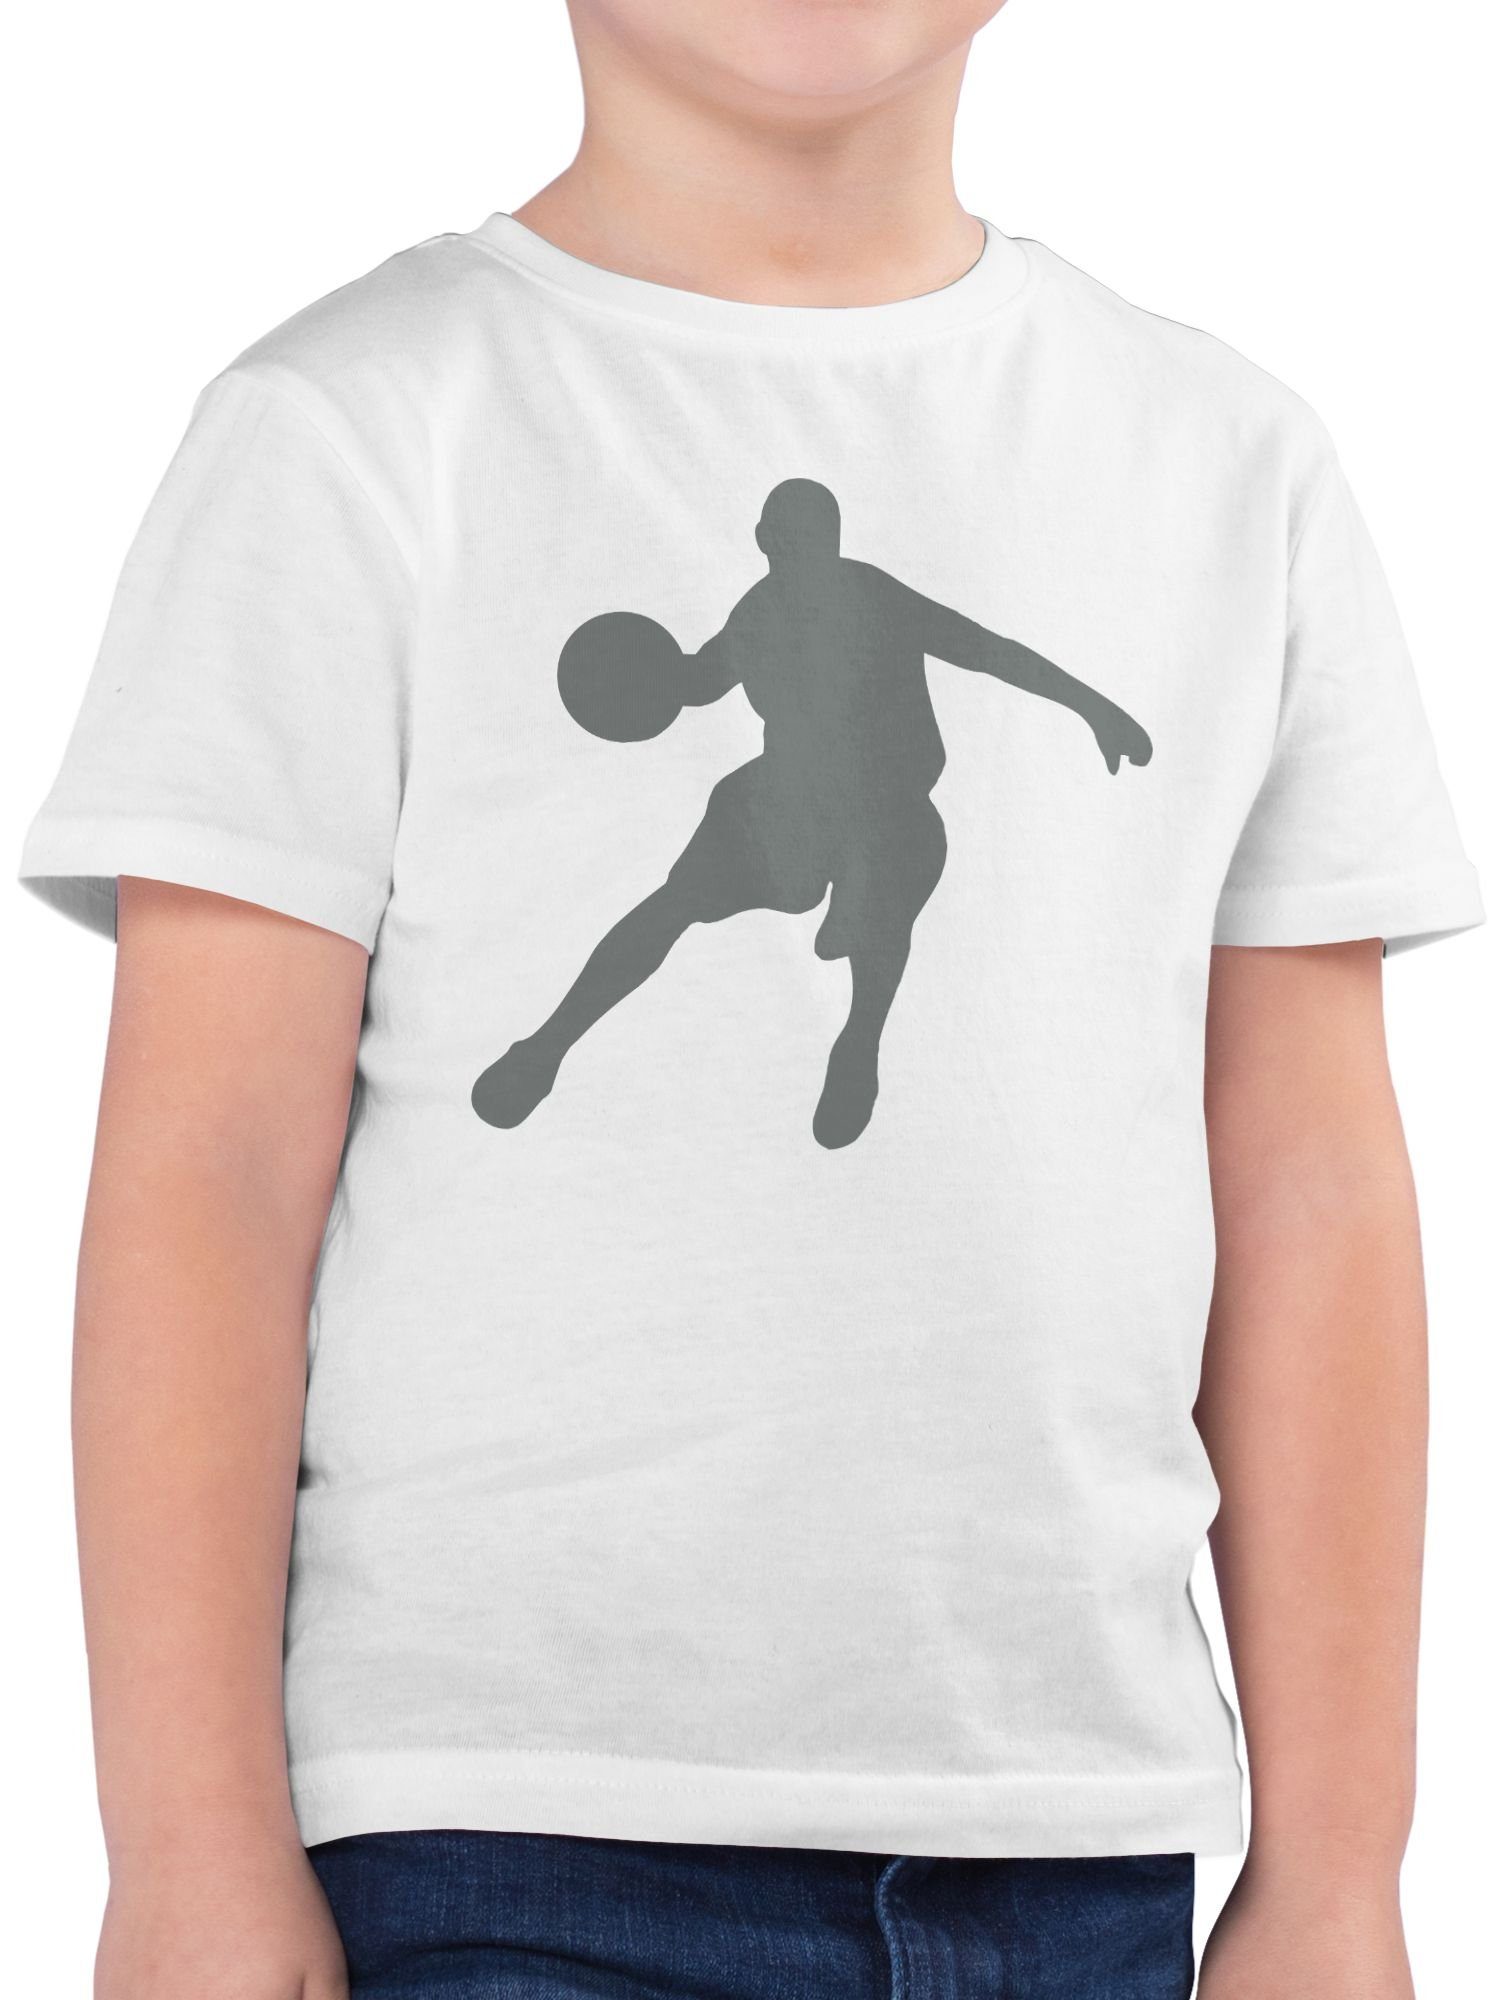 Shirtracer T-Shirt Basketballspieler Kinder Sport Kleidung 02 Weiß